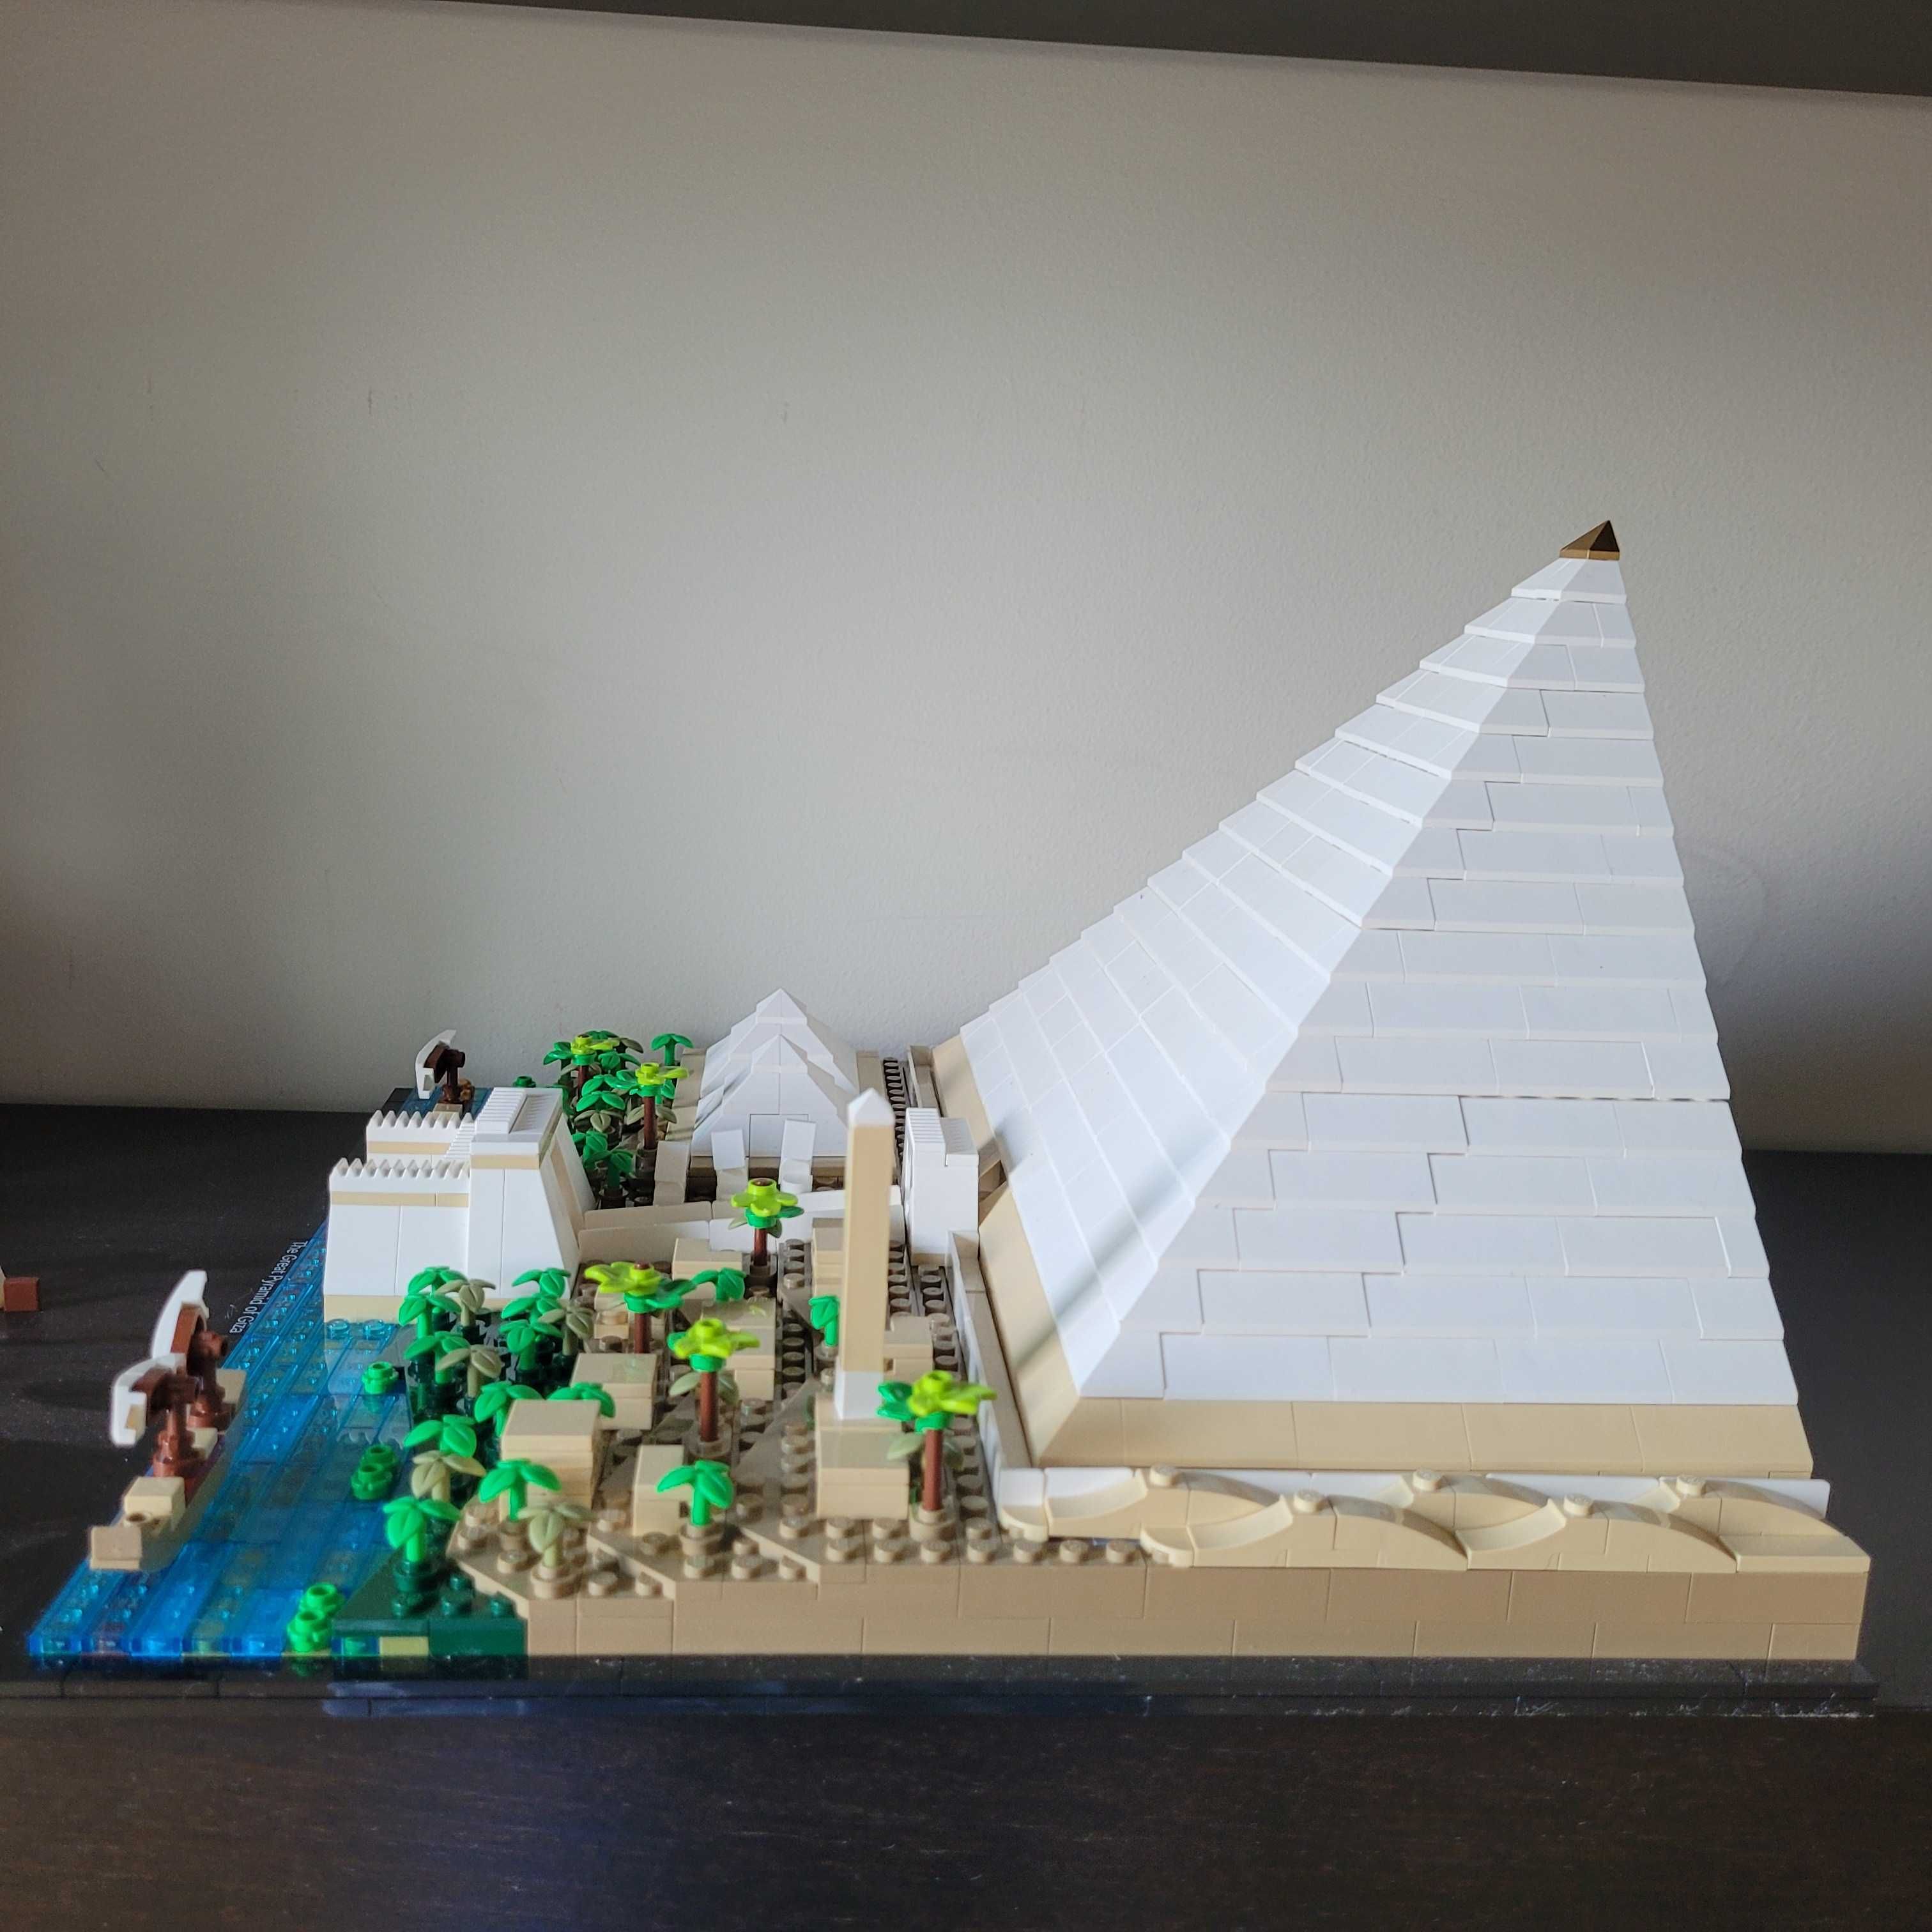 Pirâmide de giza de Lego Architecture montada